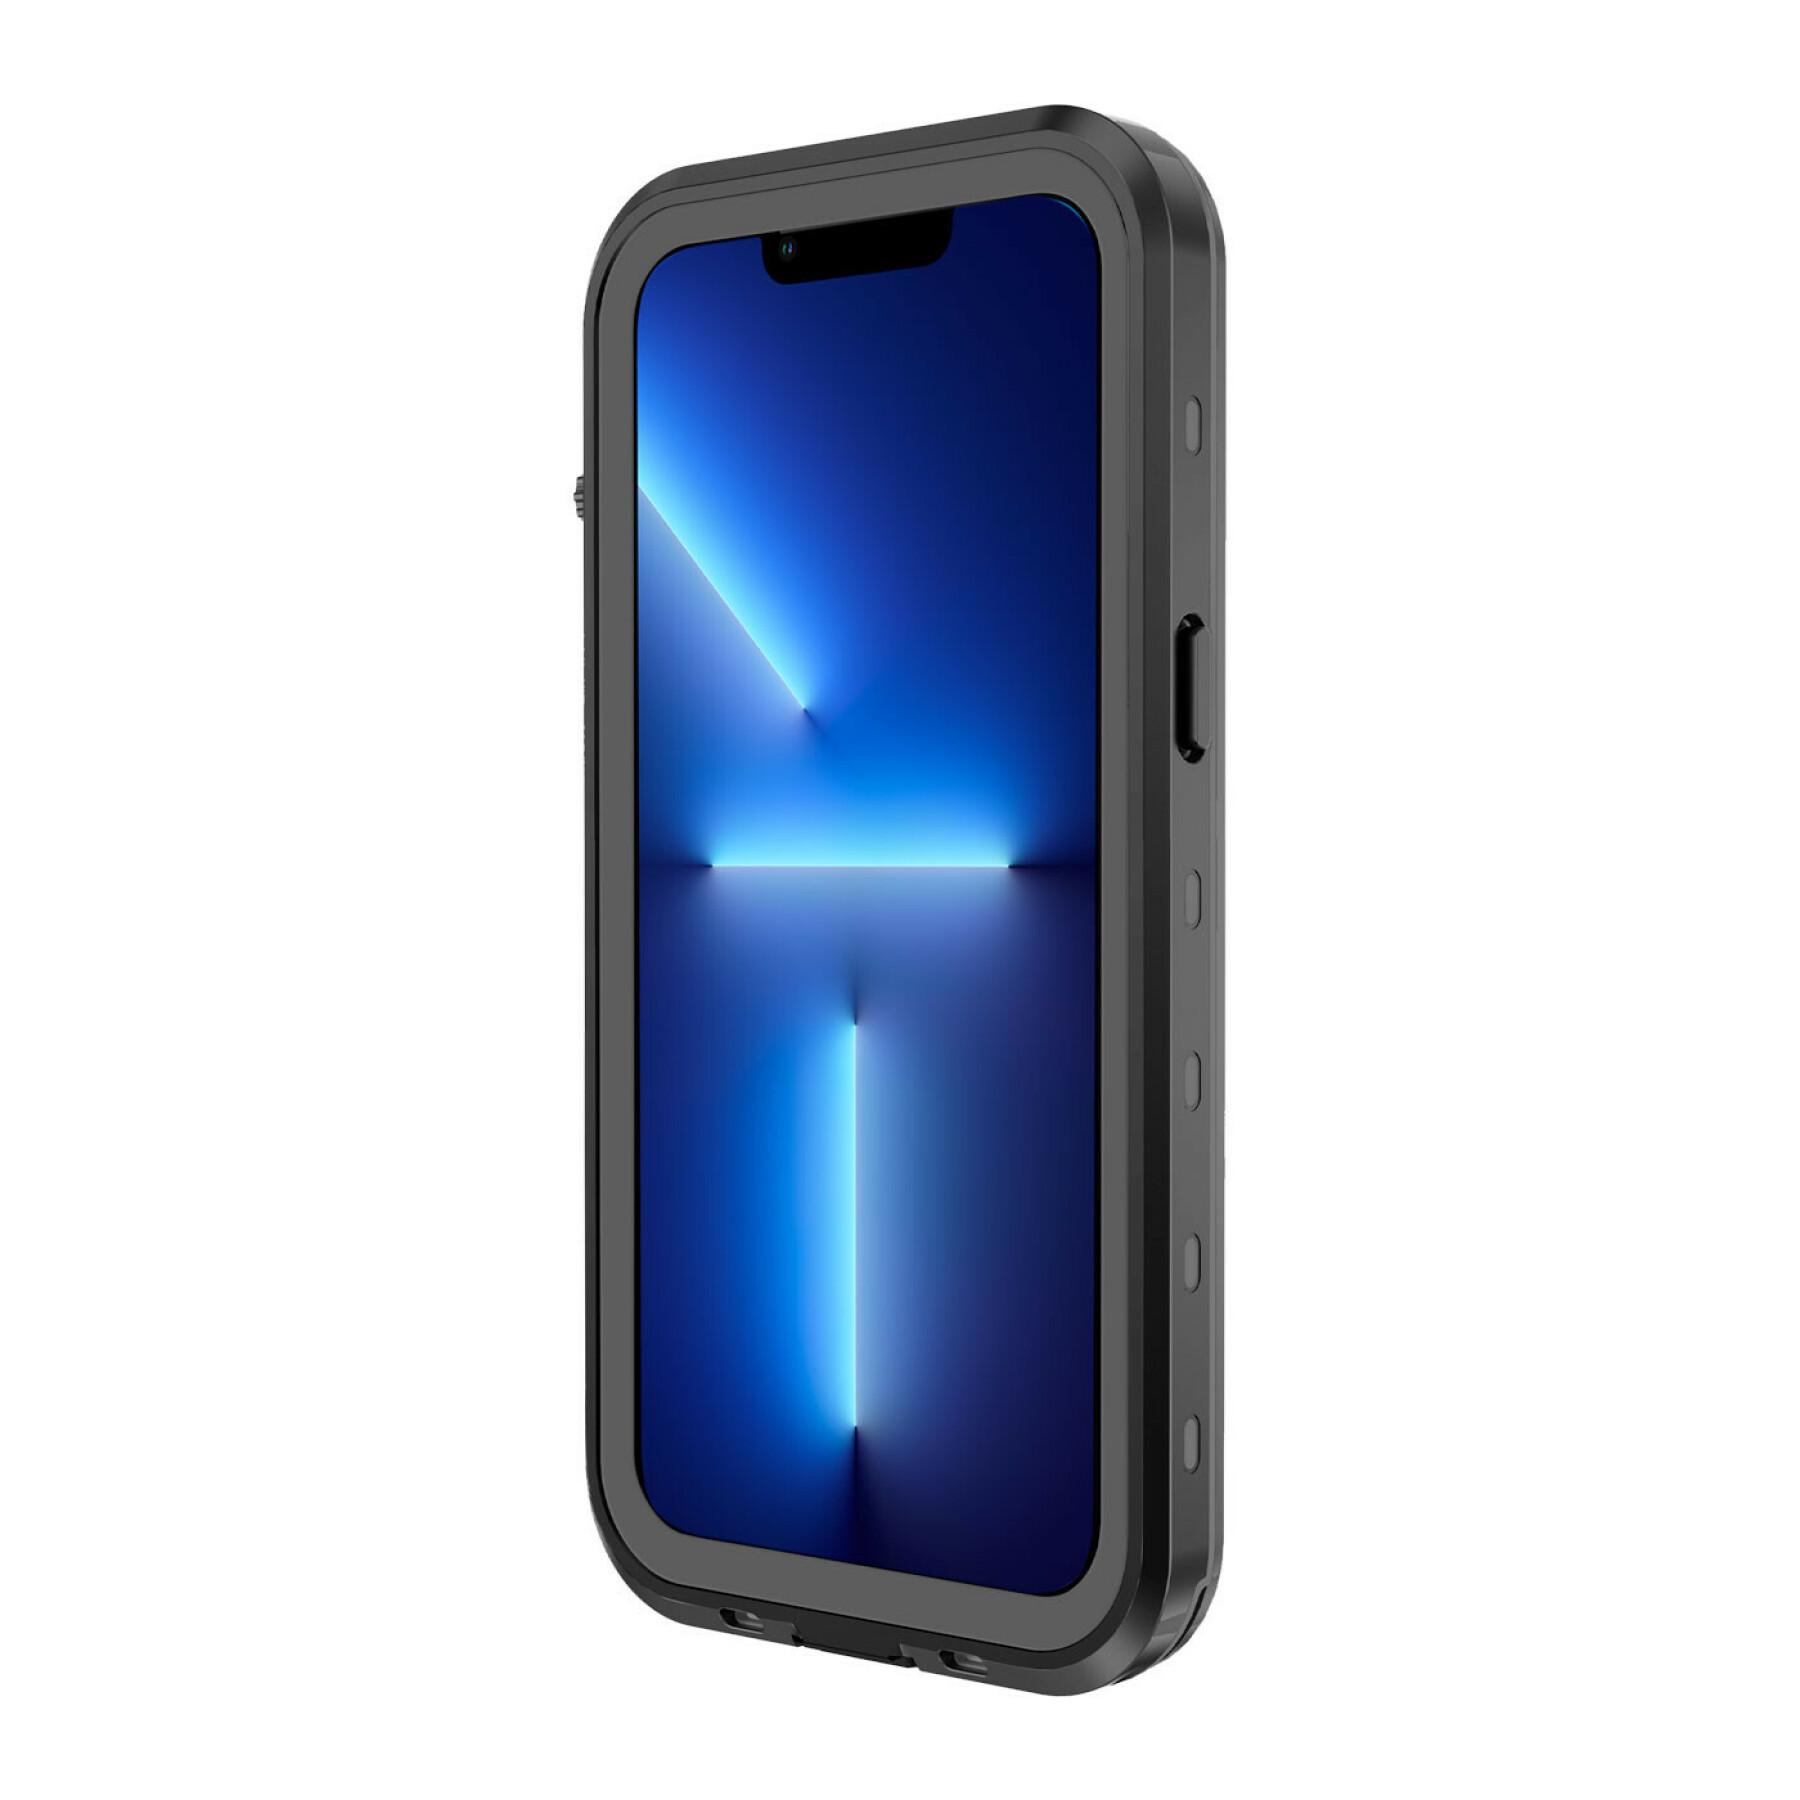 iphone 13 pro custodia impermeabile e antiurto per smartphone CaseProof